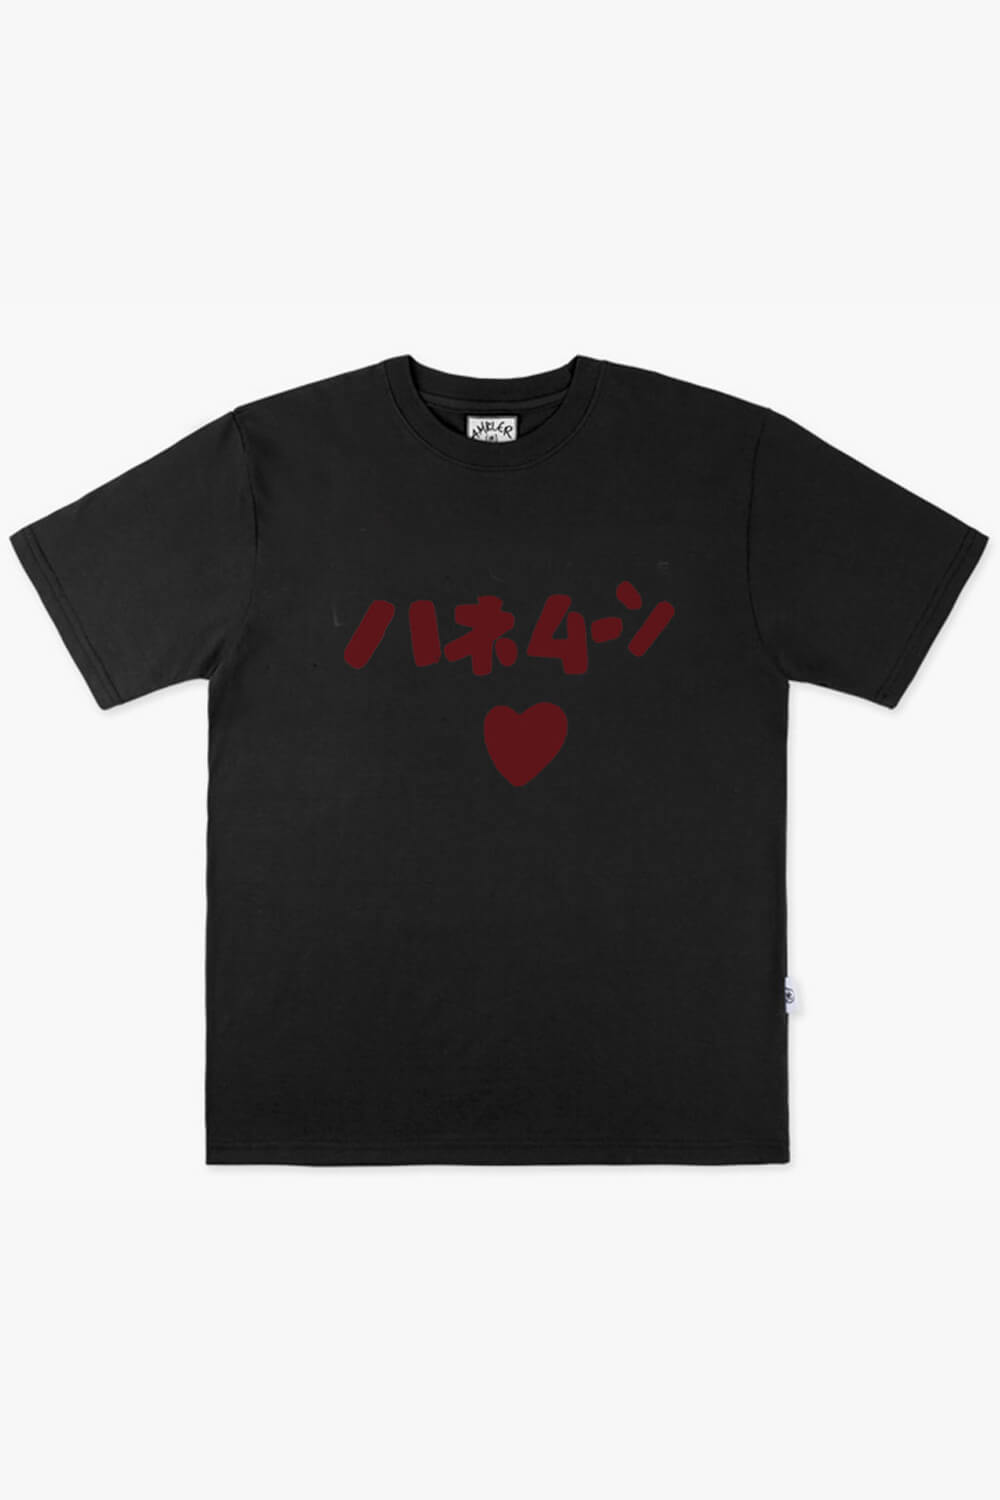 Anime Aesthetic K-On Yuri Heart T-Shirt